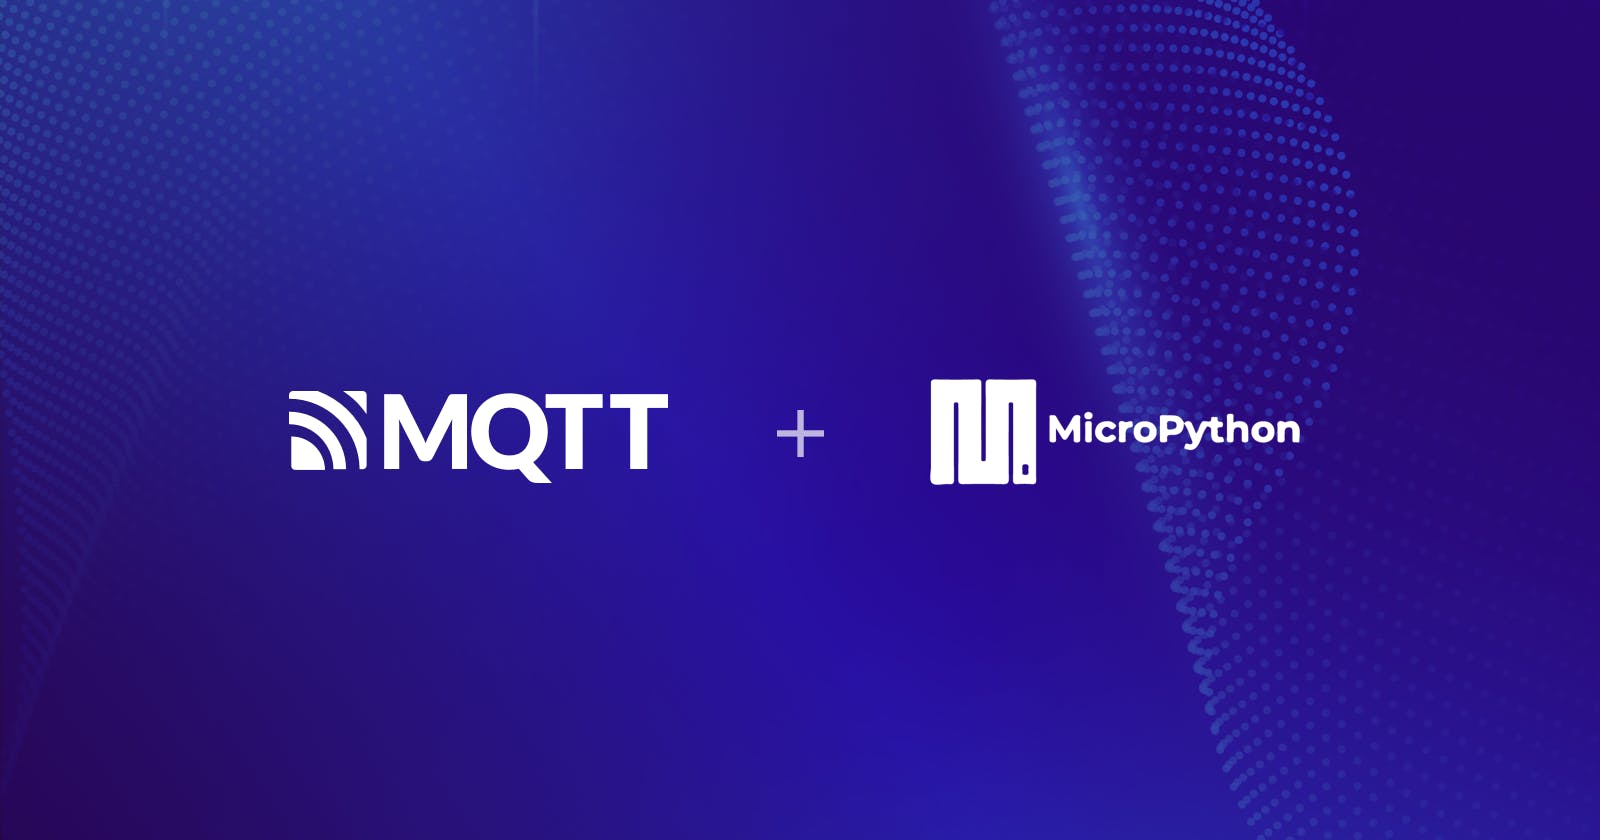 MicroPython MQTT Tutorial Based on Raspberry Pi